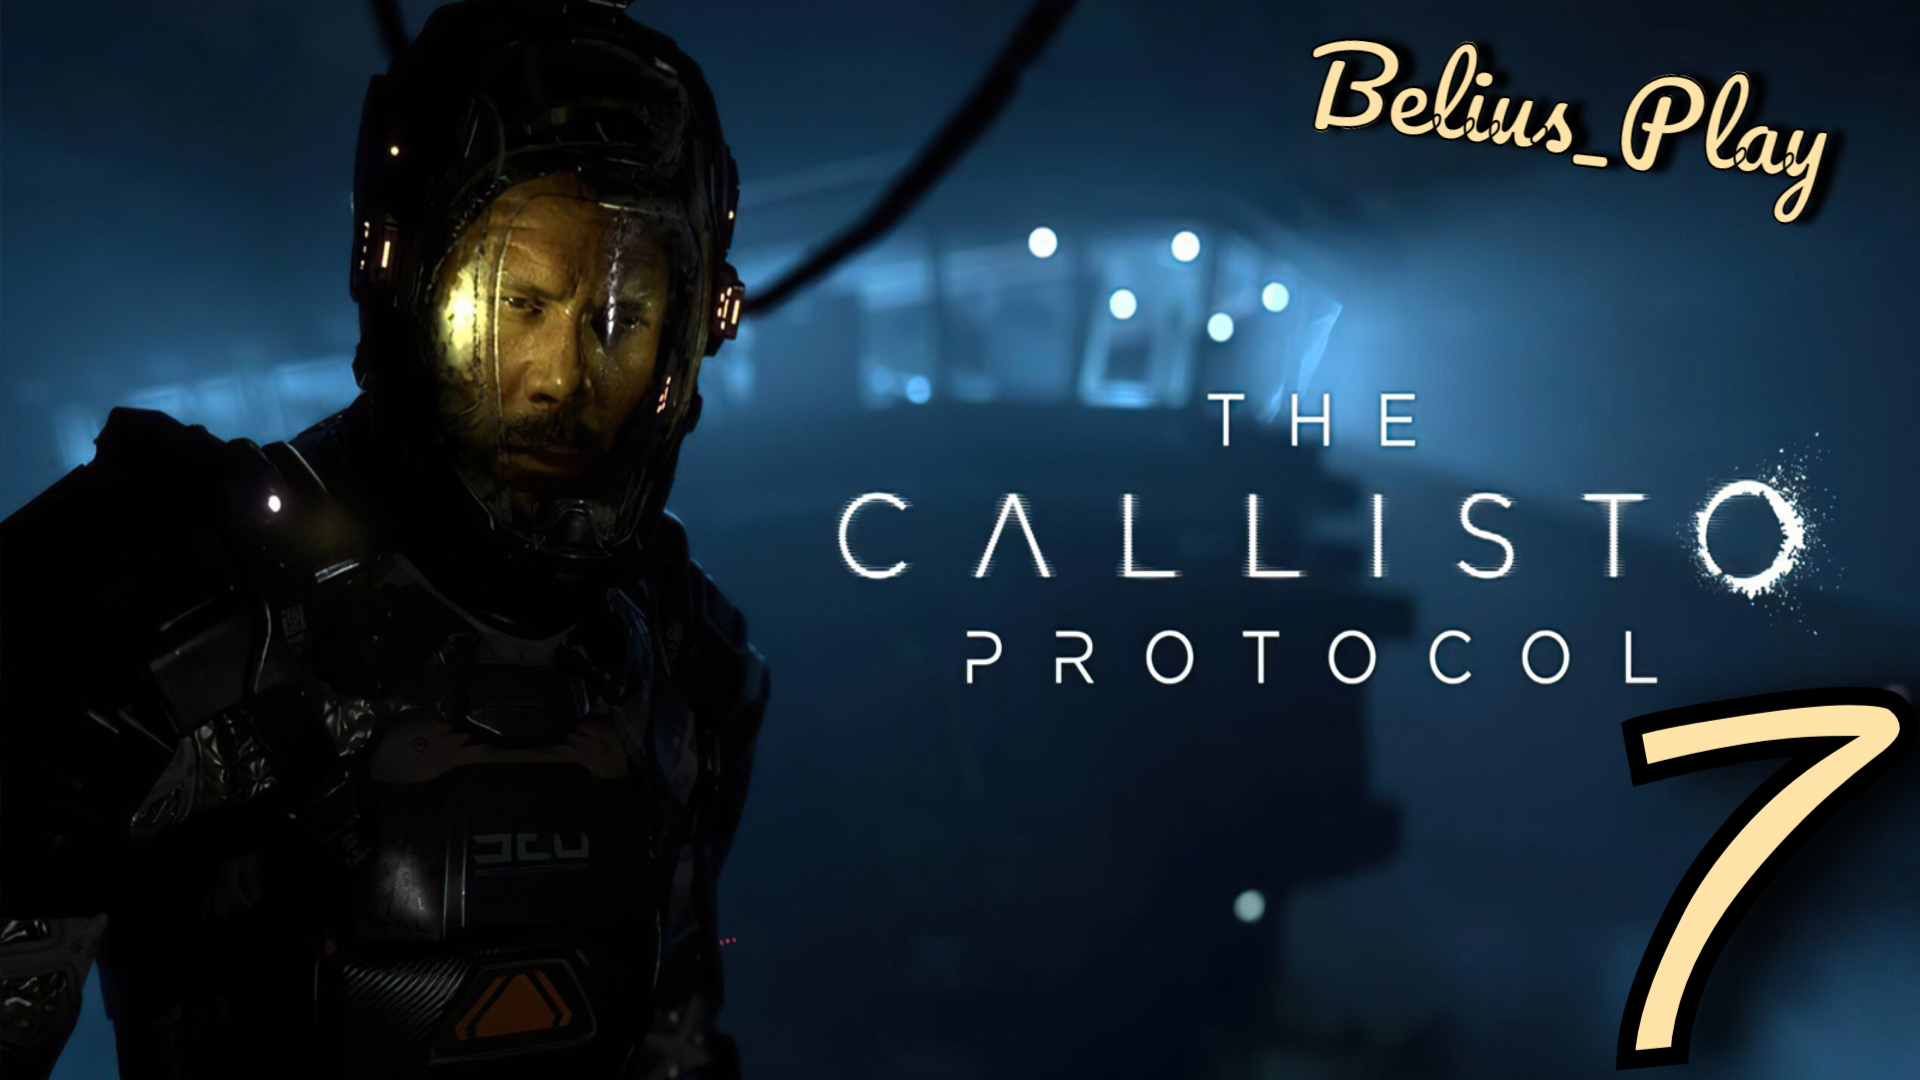 The Callisto Protocol. САРАНЧА НА ДЕРЕВЬЯХ) #7 (PS4)